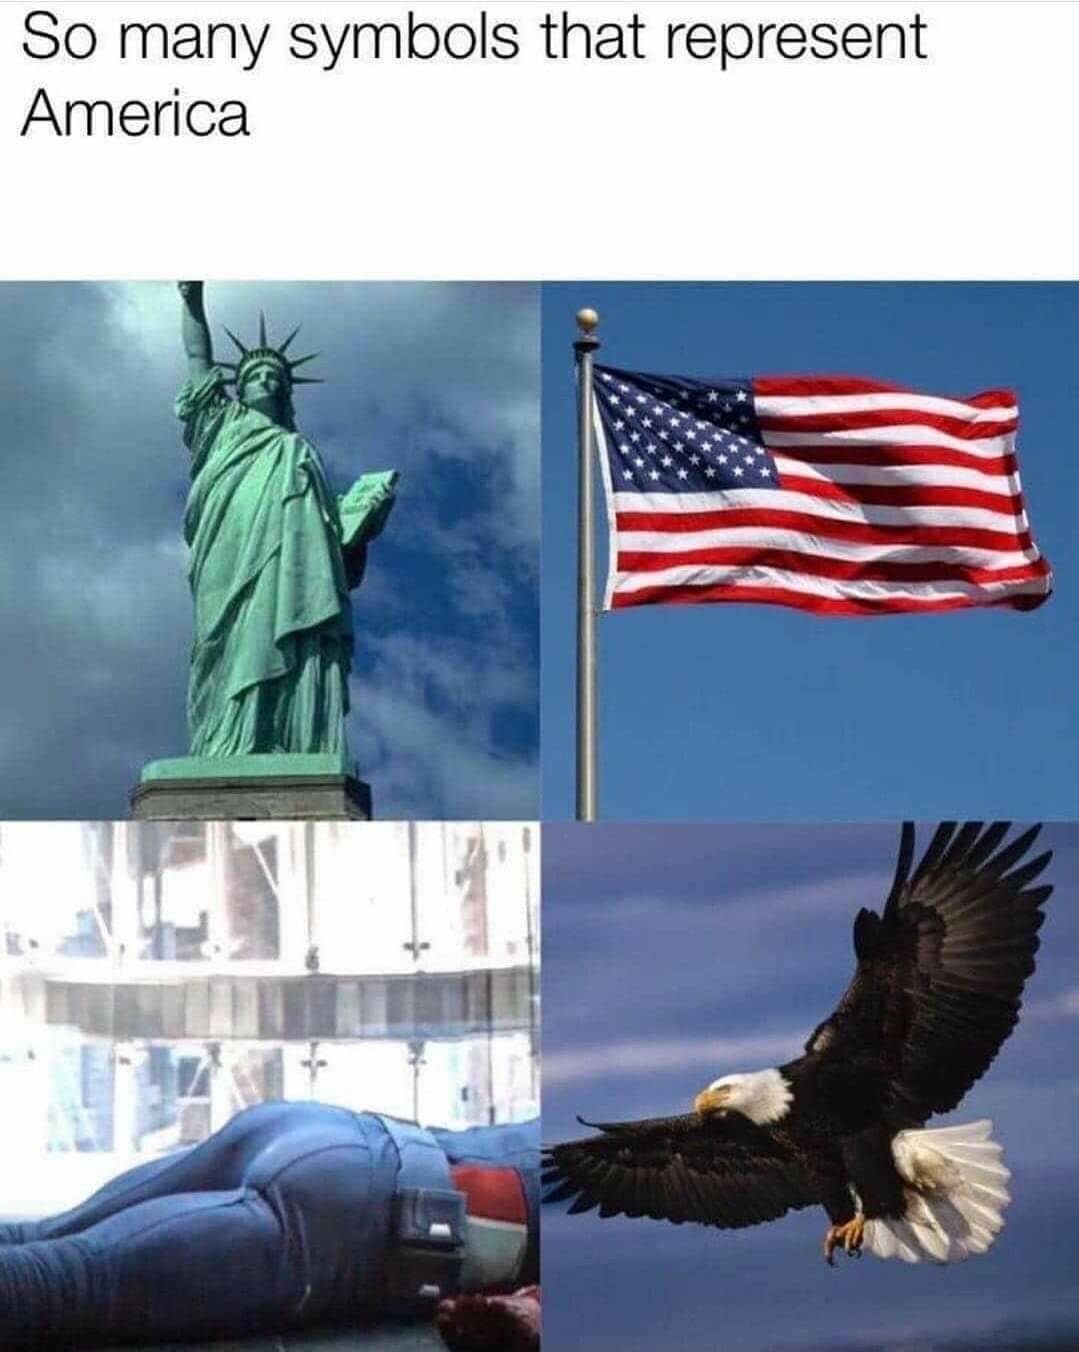 statue of liberty - So many symbols that represent America